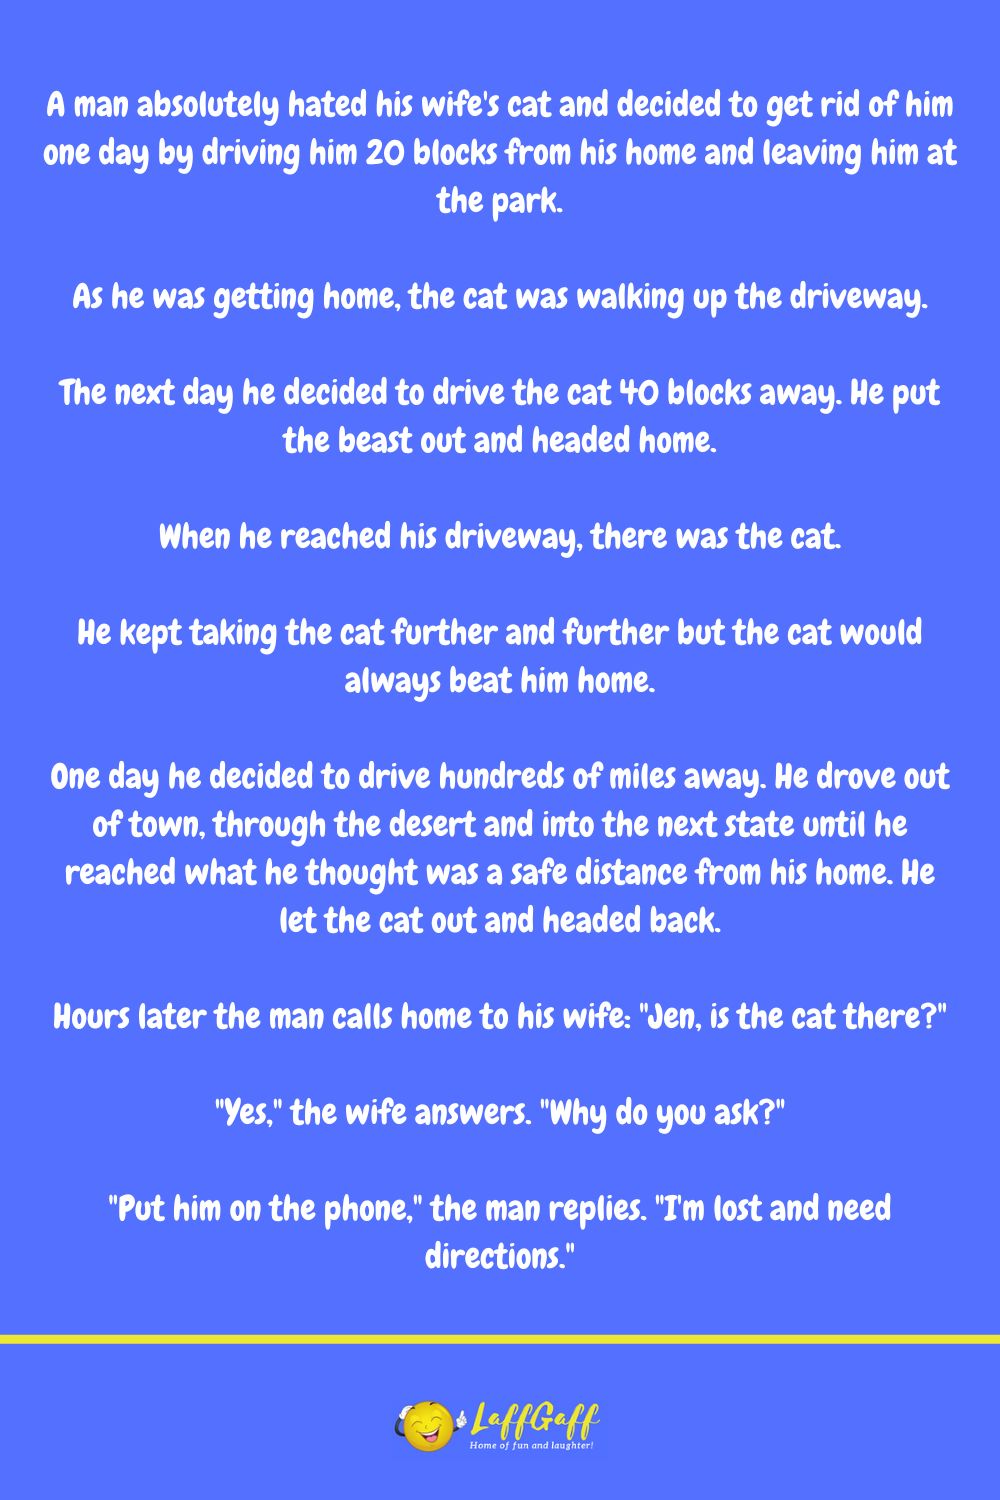 Cat directions joke from LaffGaff.